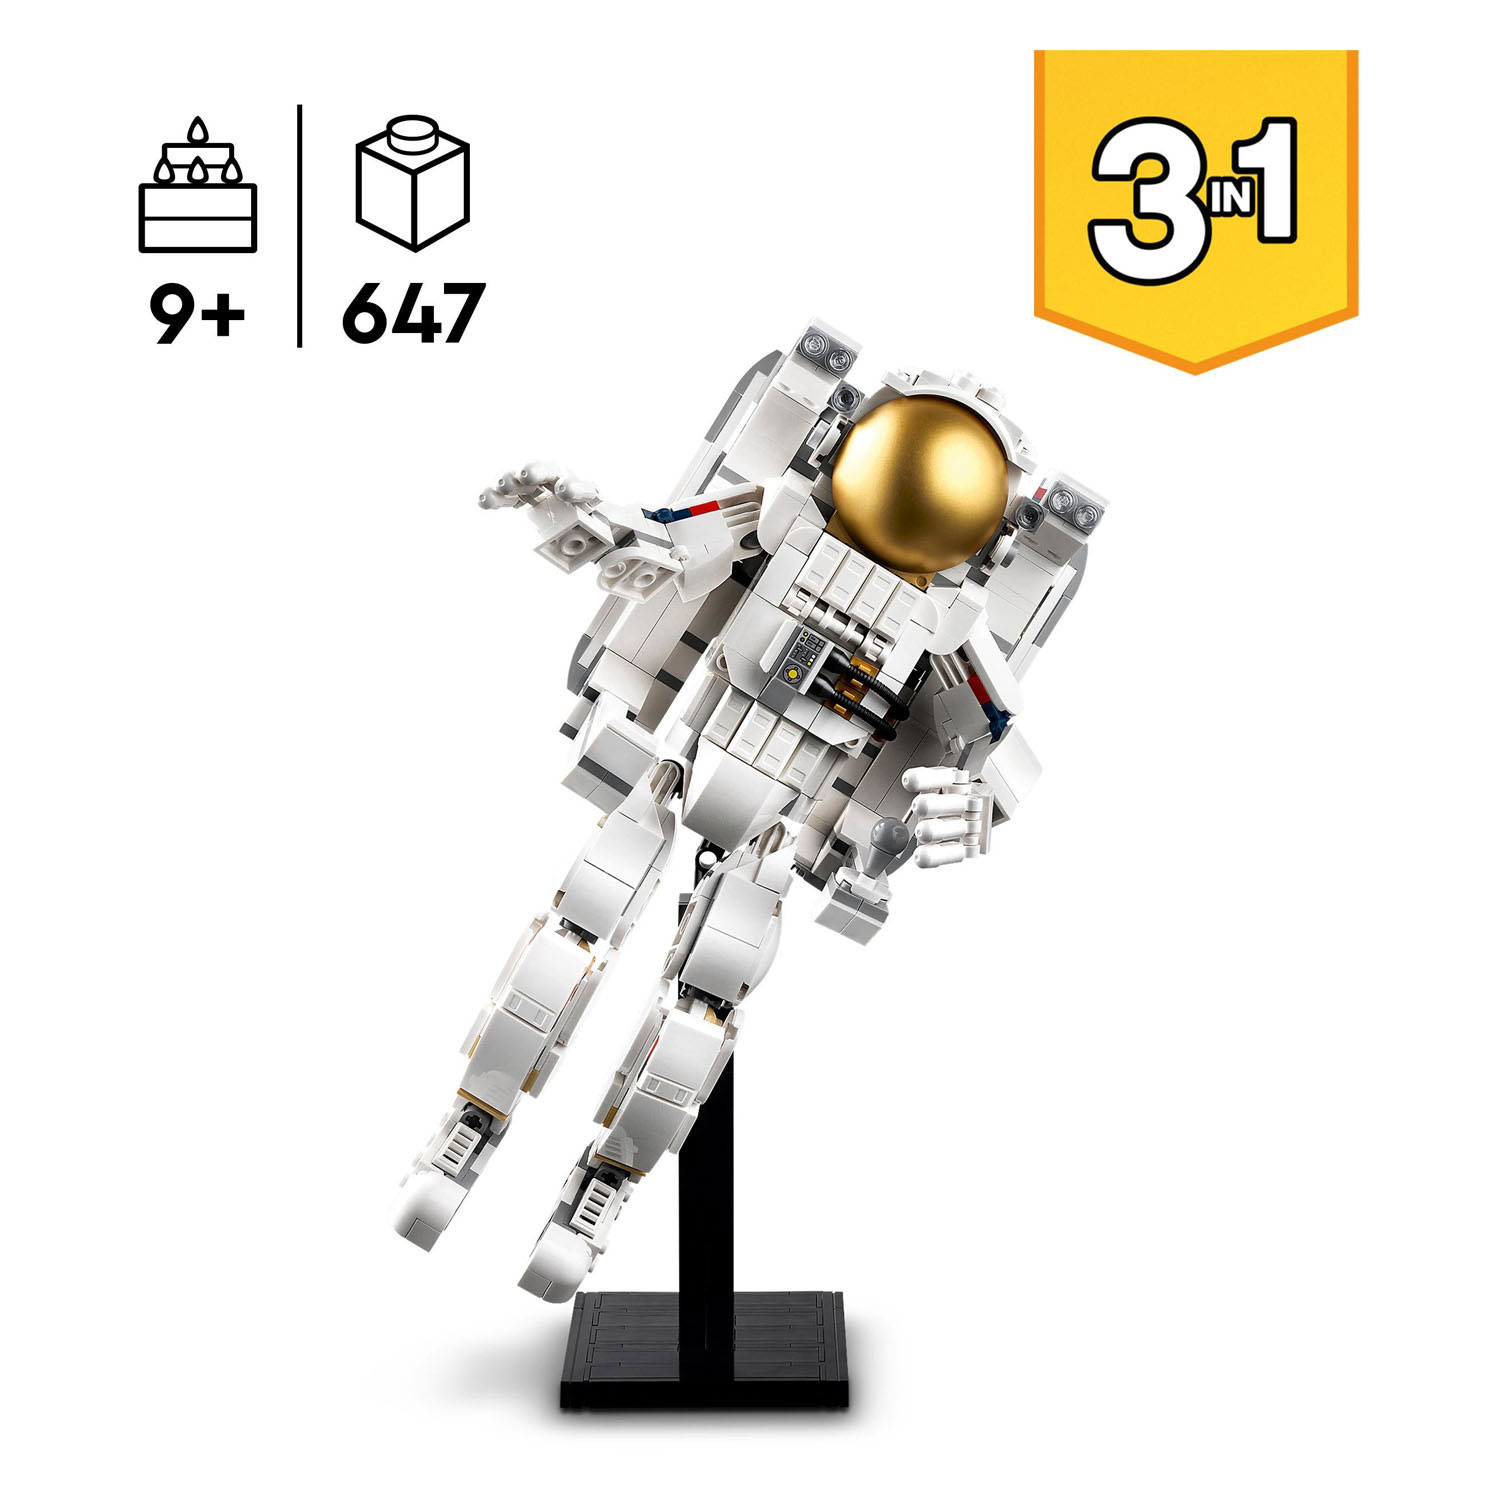 LEGO Creator 31152 Ruimtevaarder